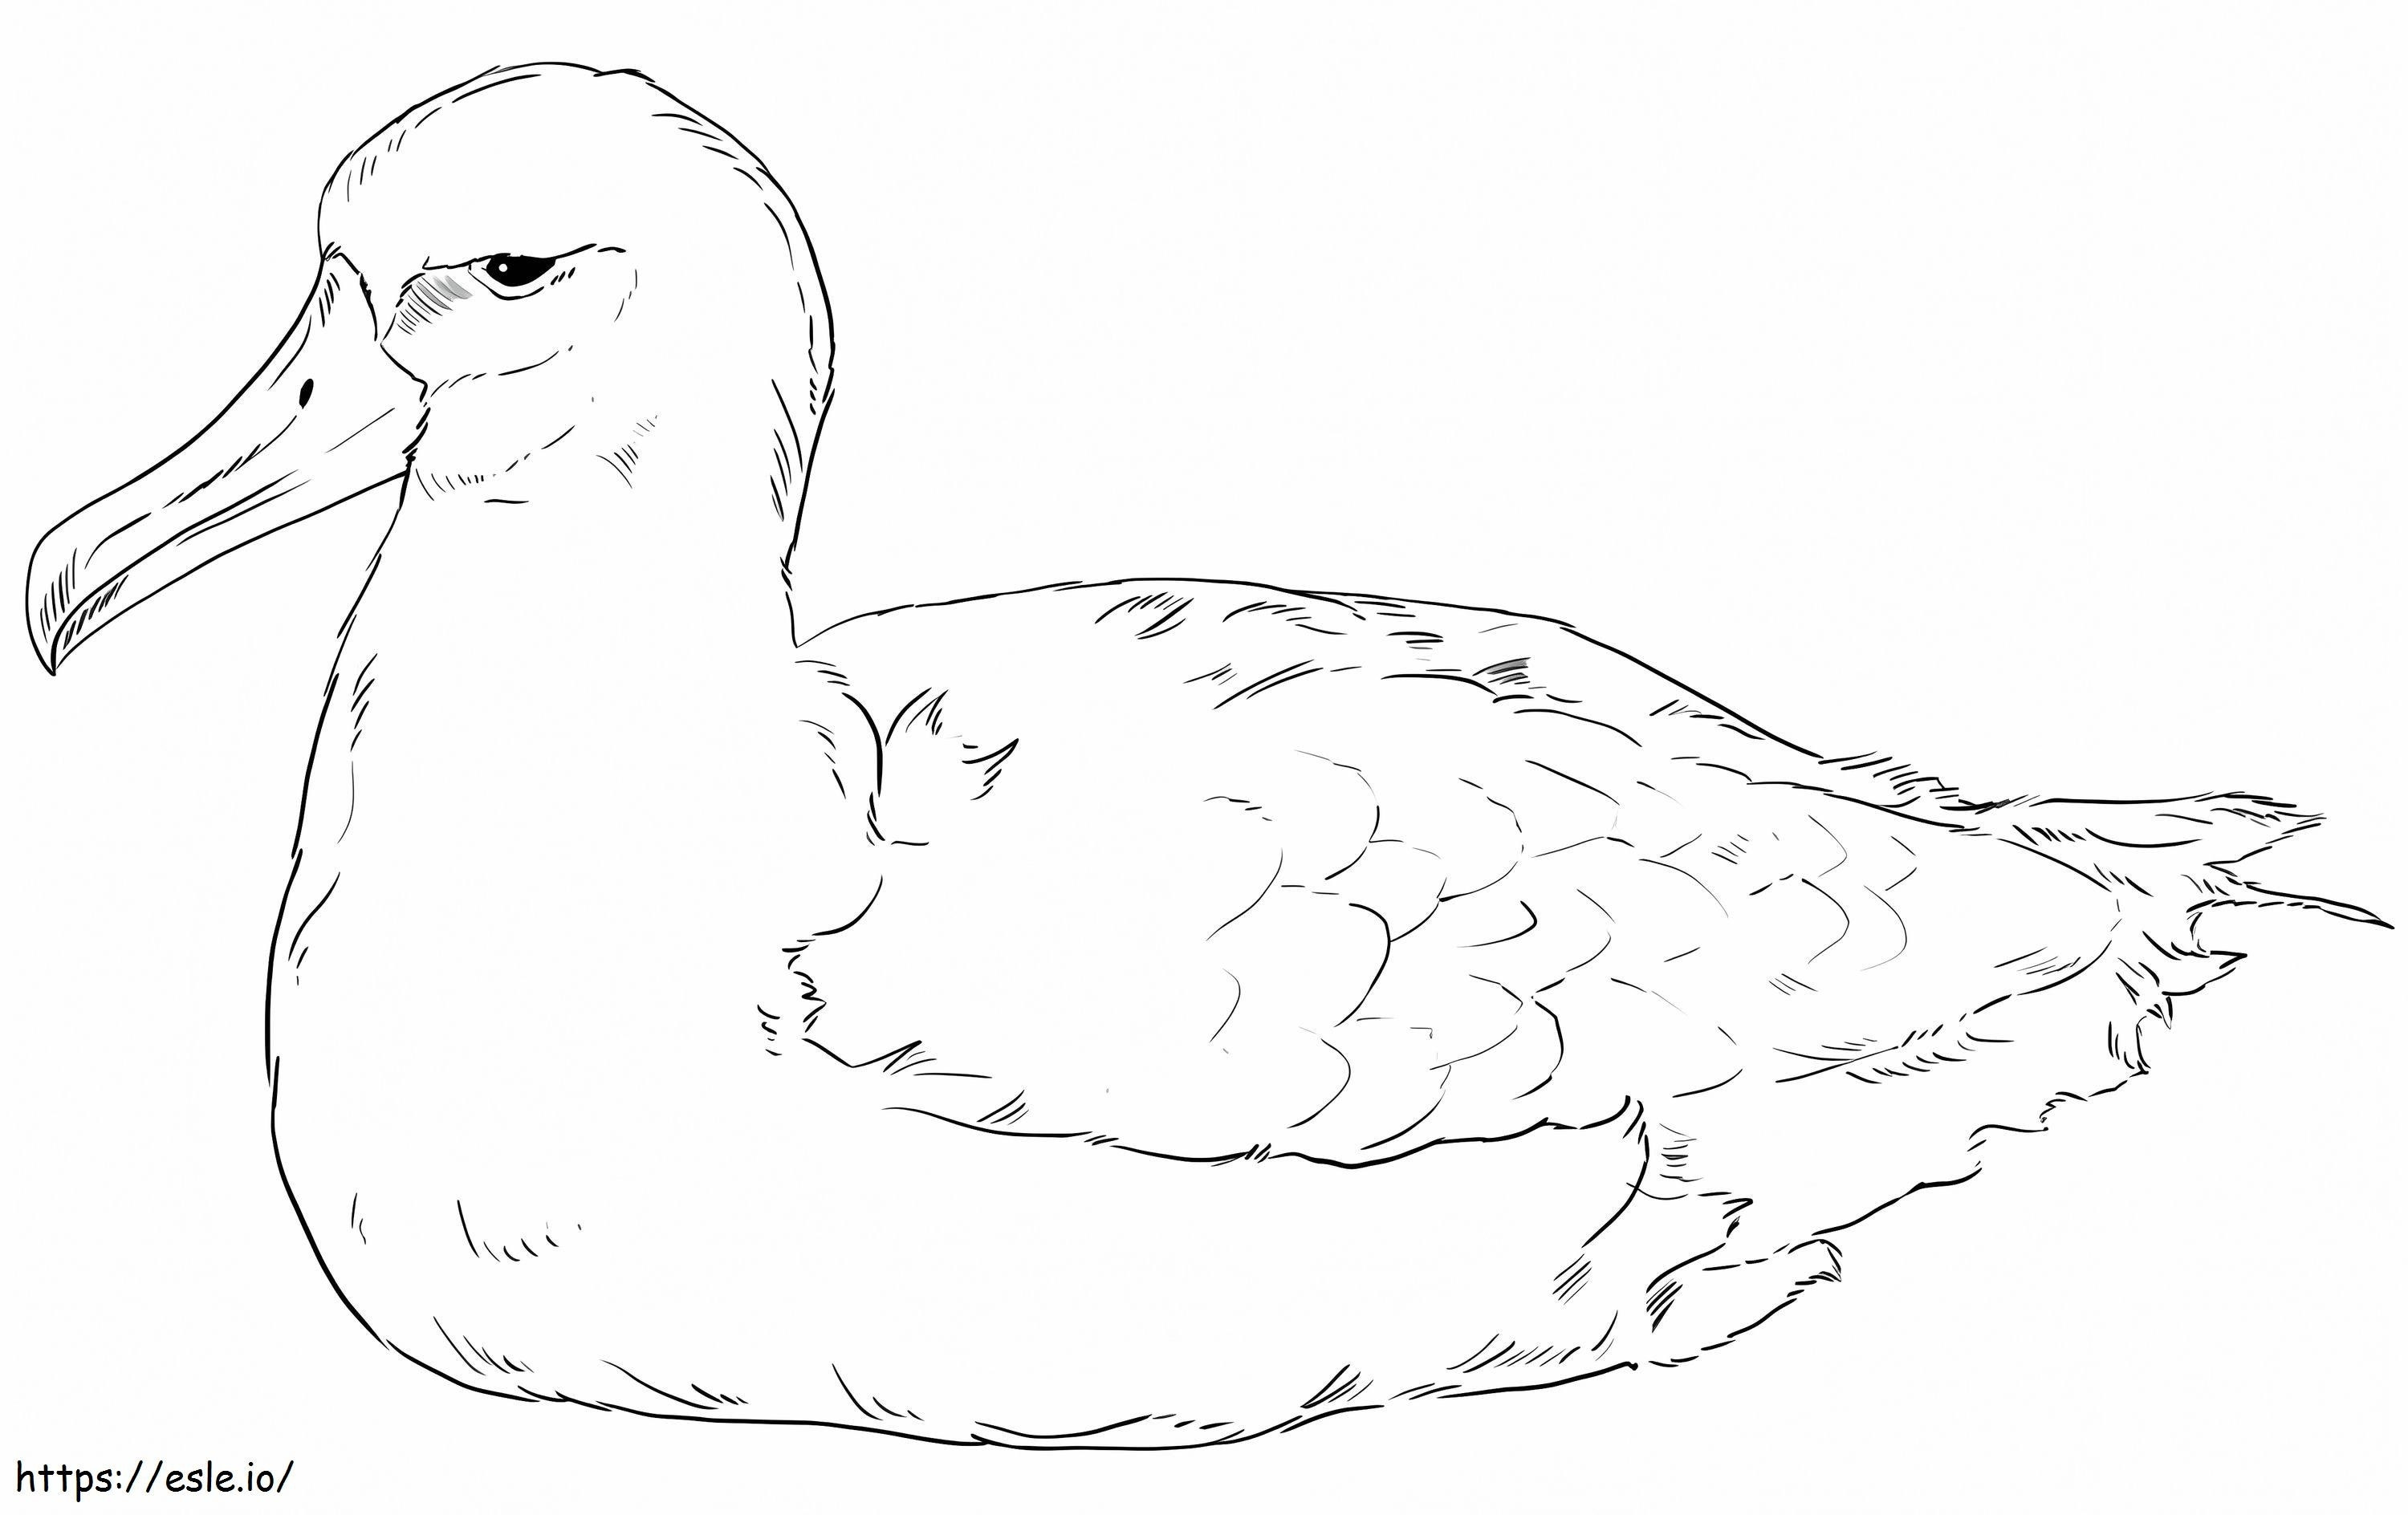 Laysan Albatros kolorowanka